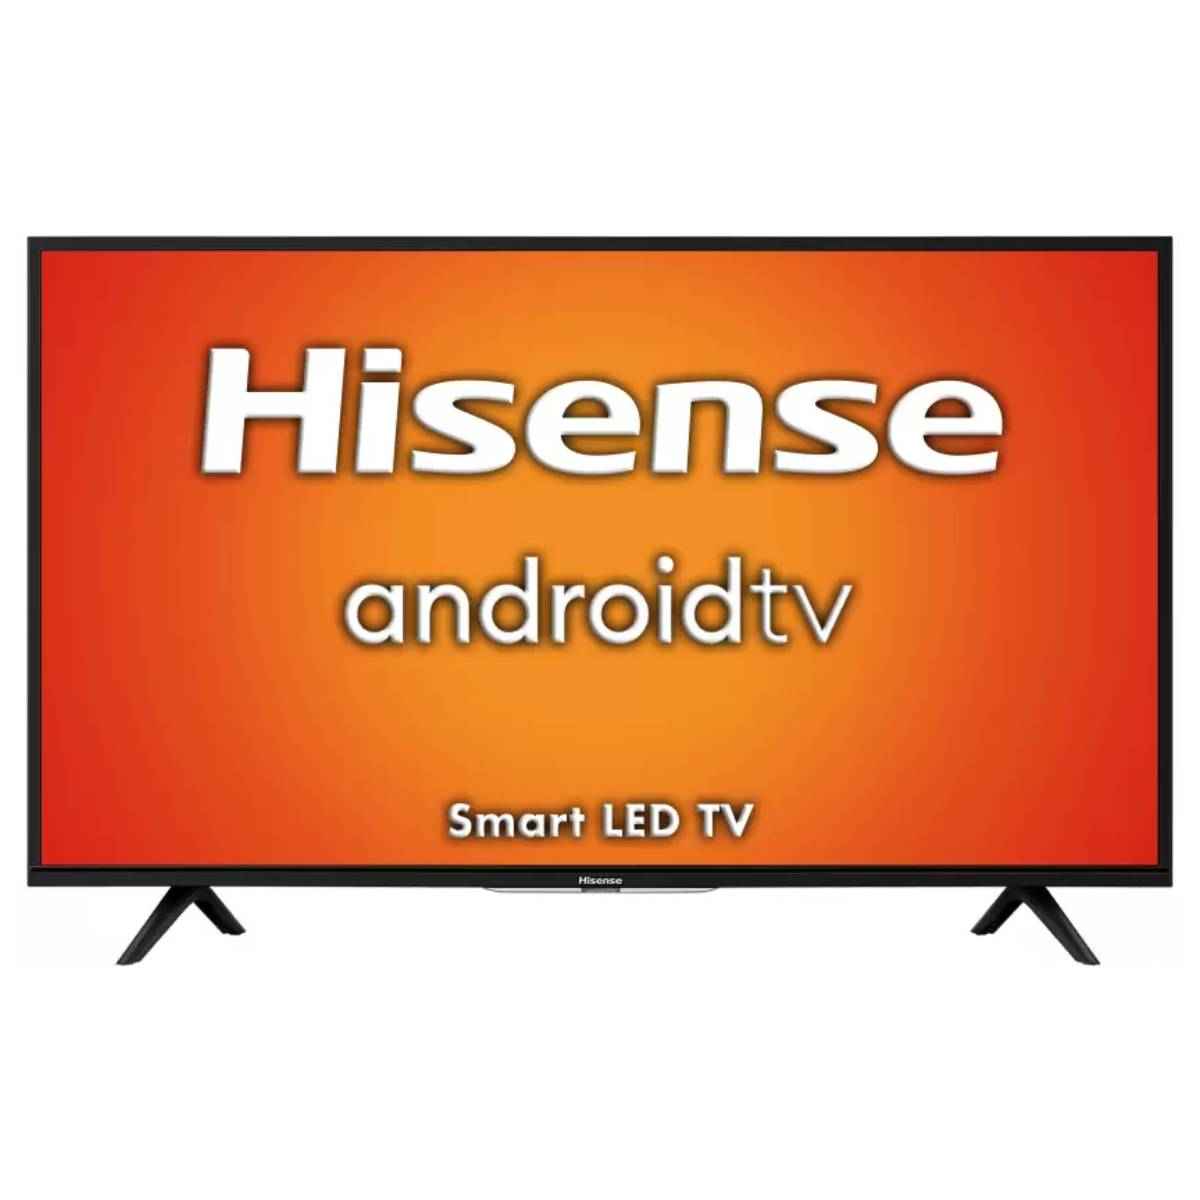 Hisense A56E 40-inch Full HD LED TV